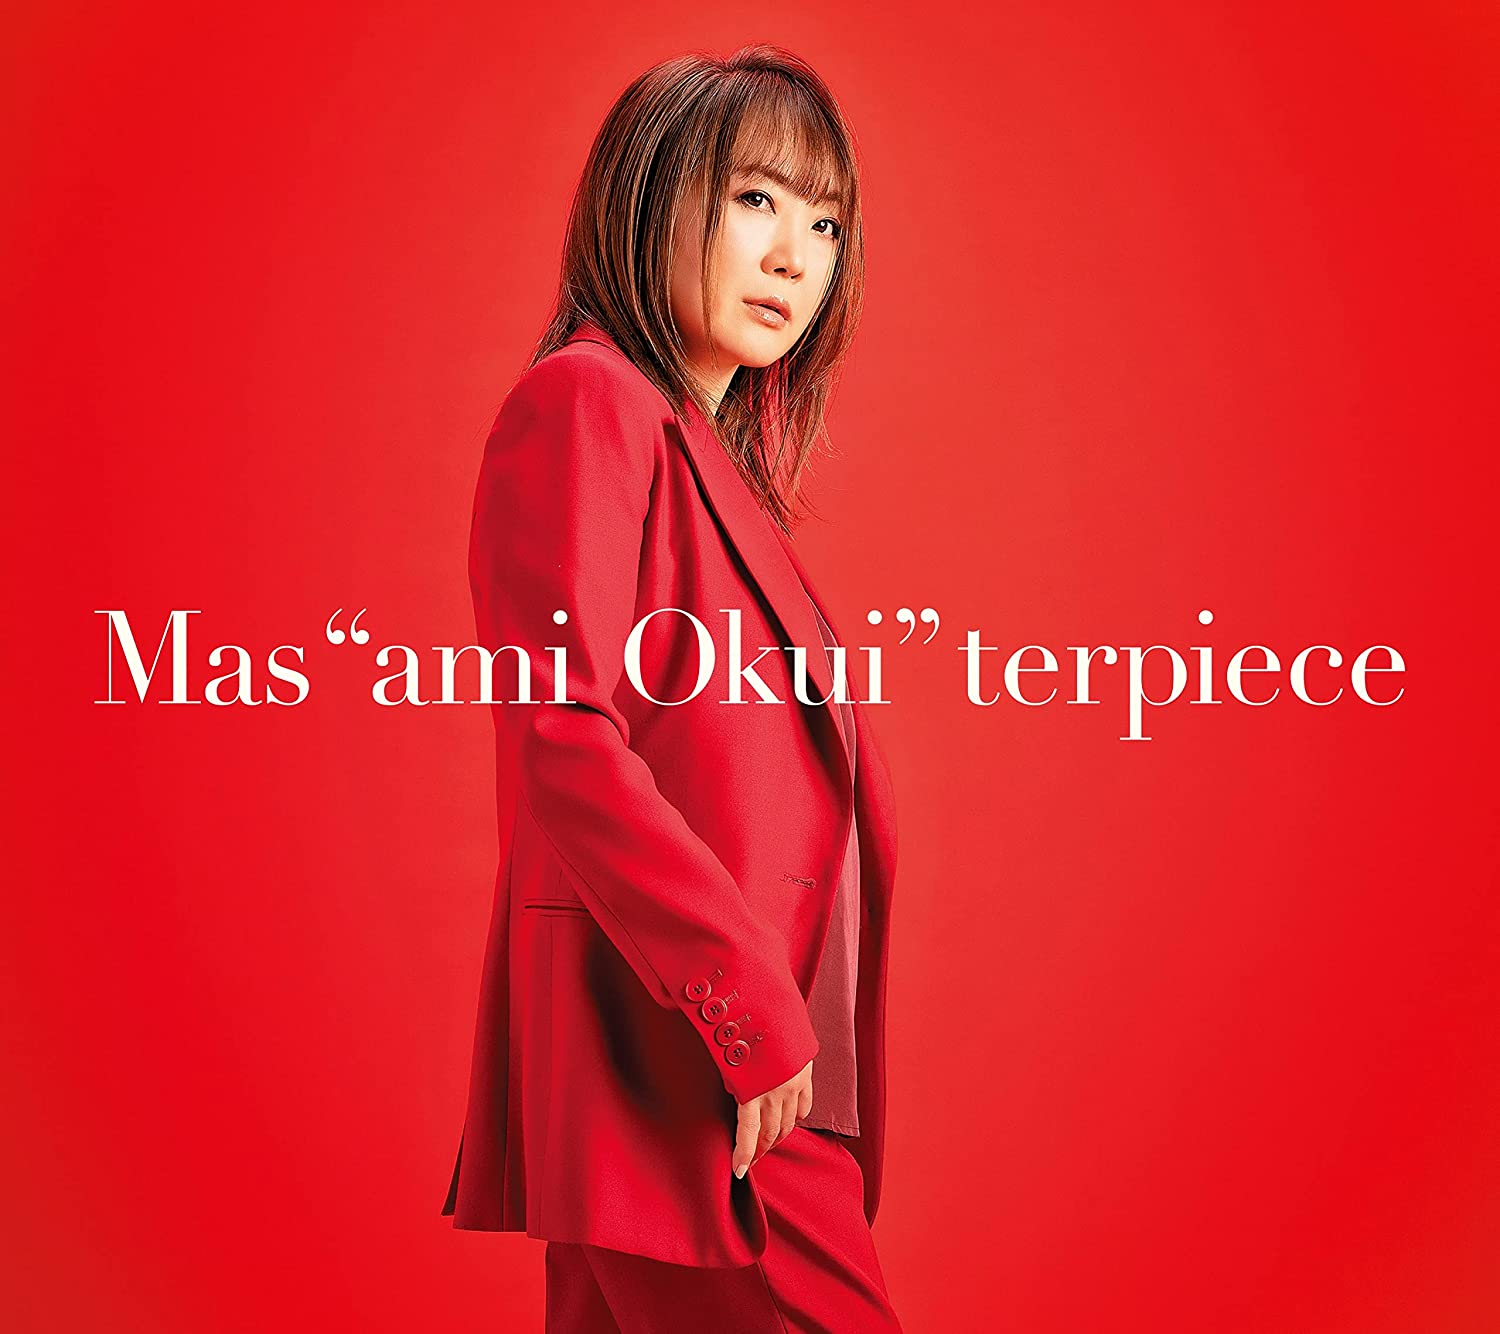 Masami Okui: Mas“ami Okui”terpiece